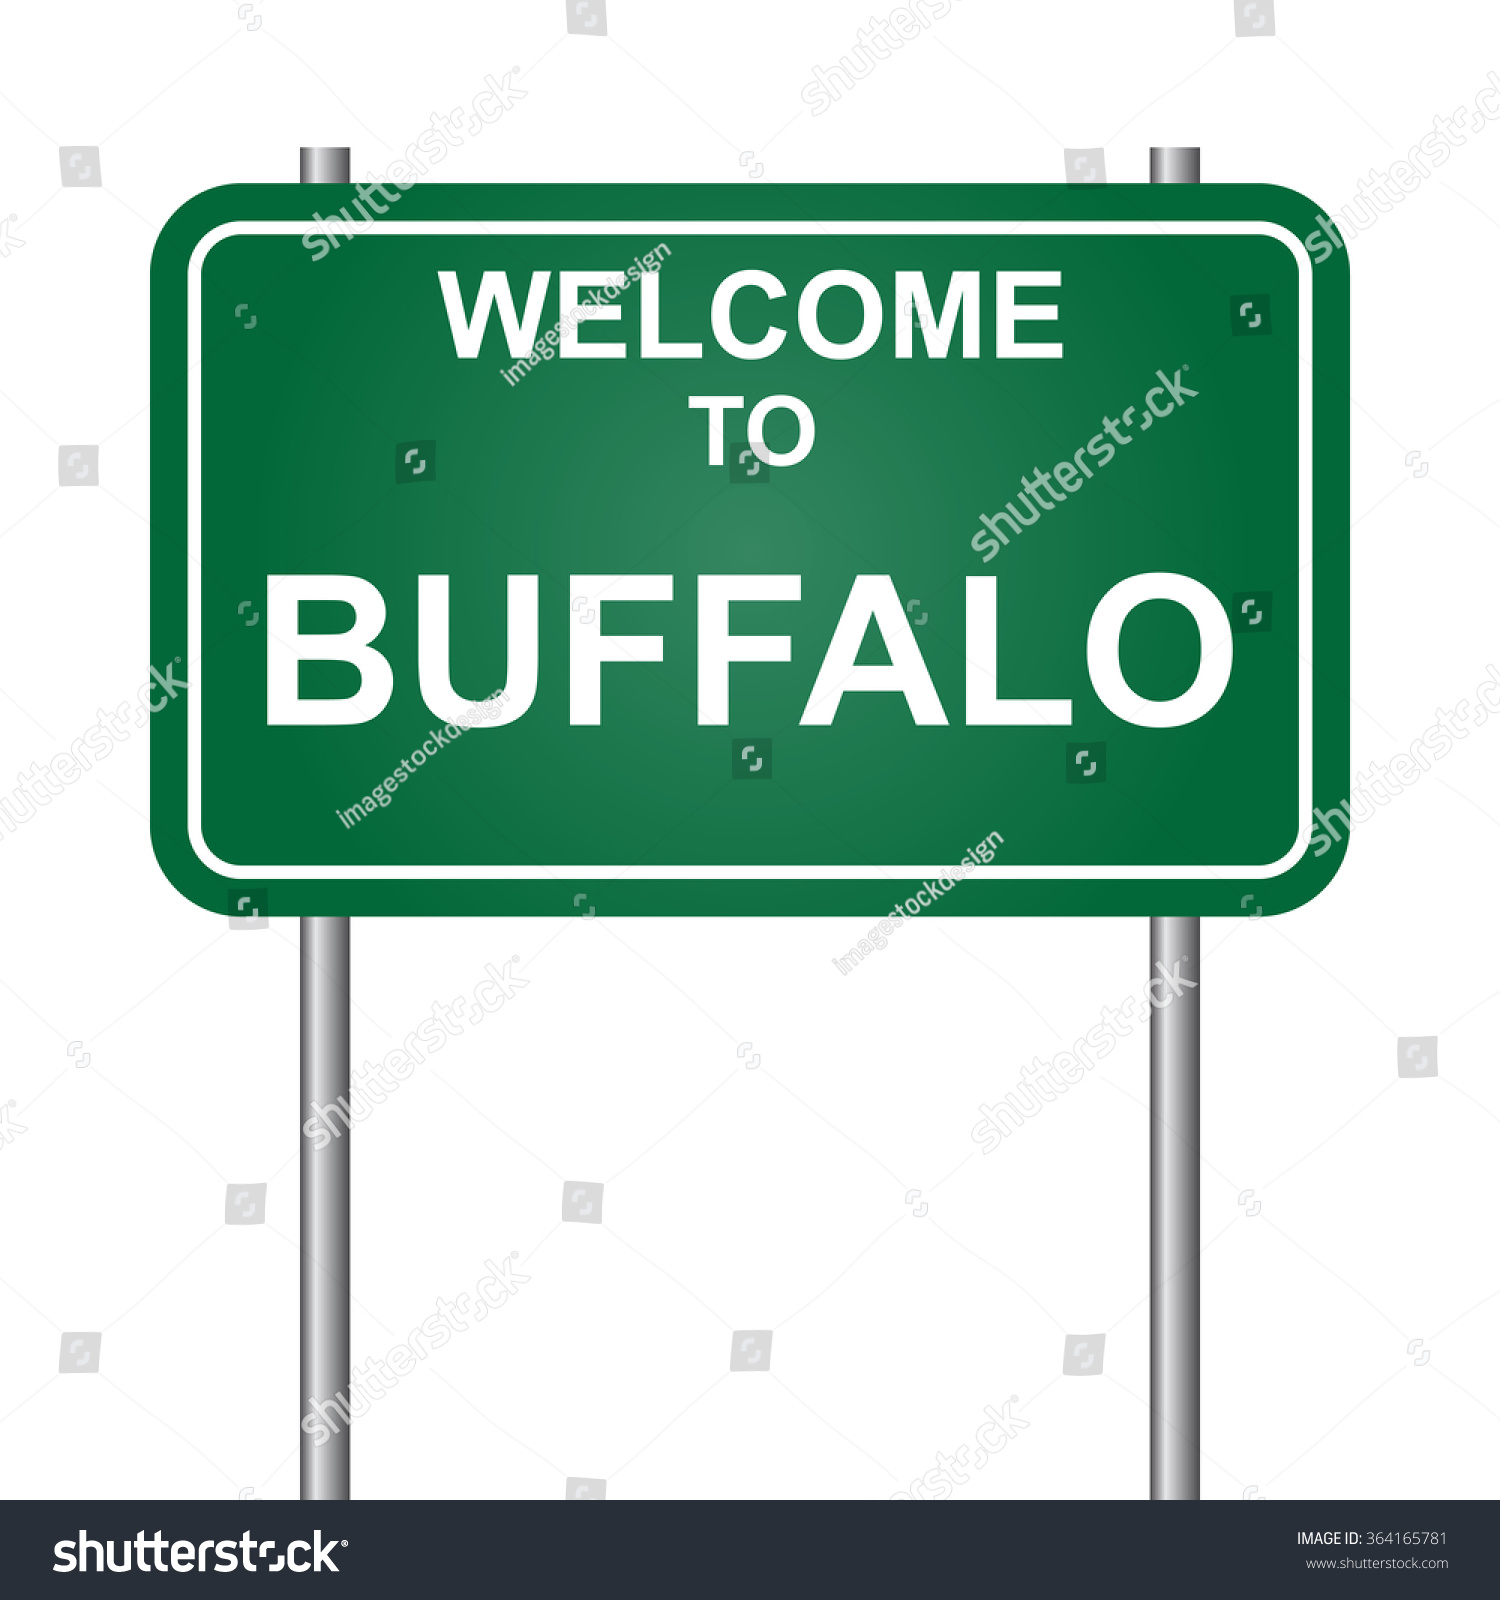 Welcome Buffalo Vector Stock (Royalty Free) 364165781